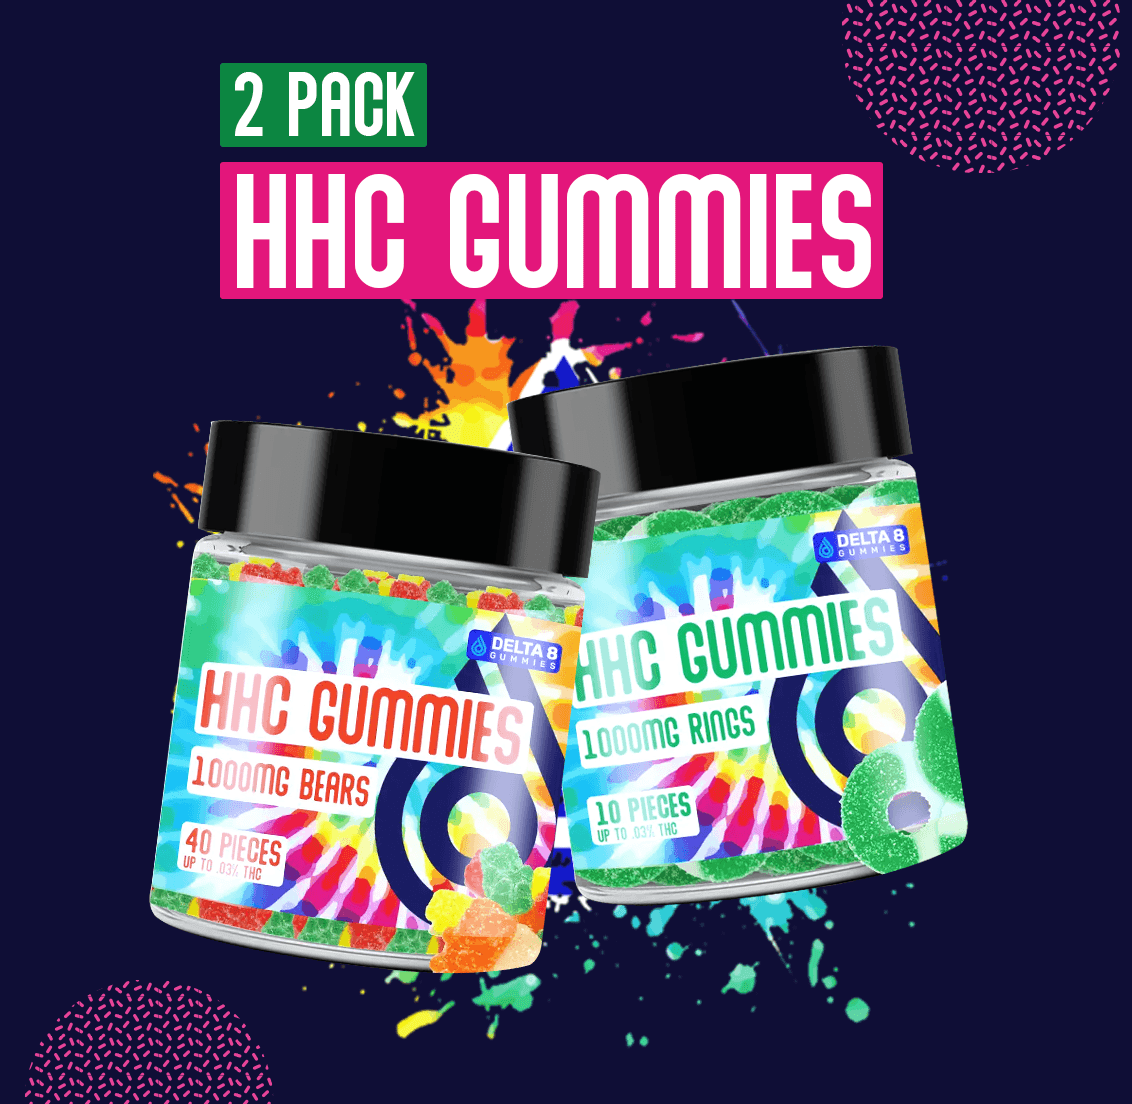 HHC Gummies 2,000mg Pack